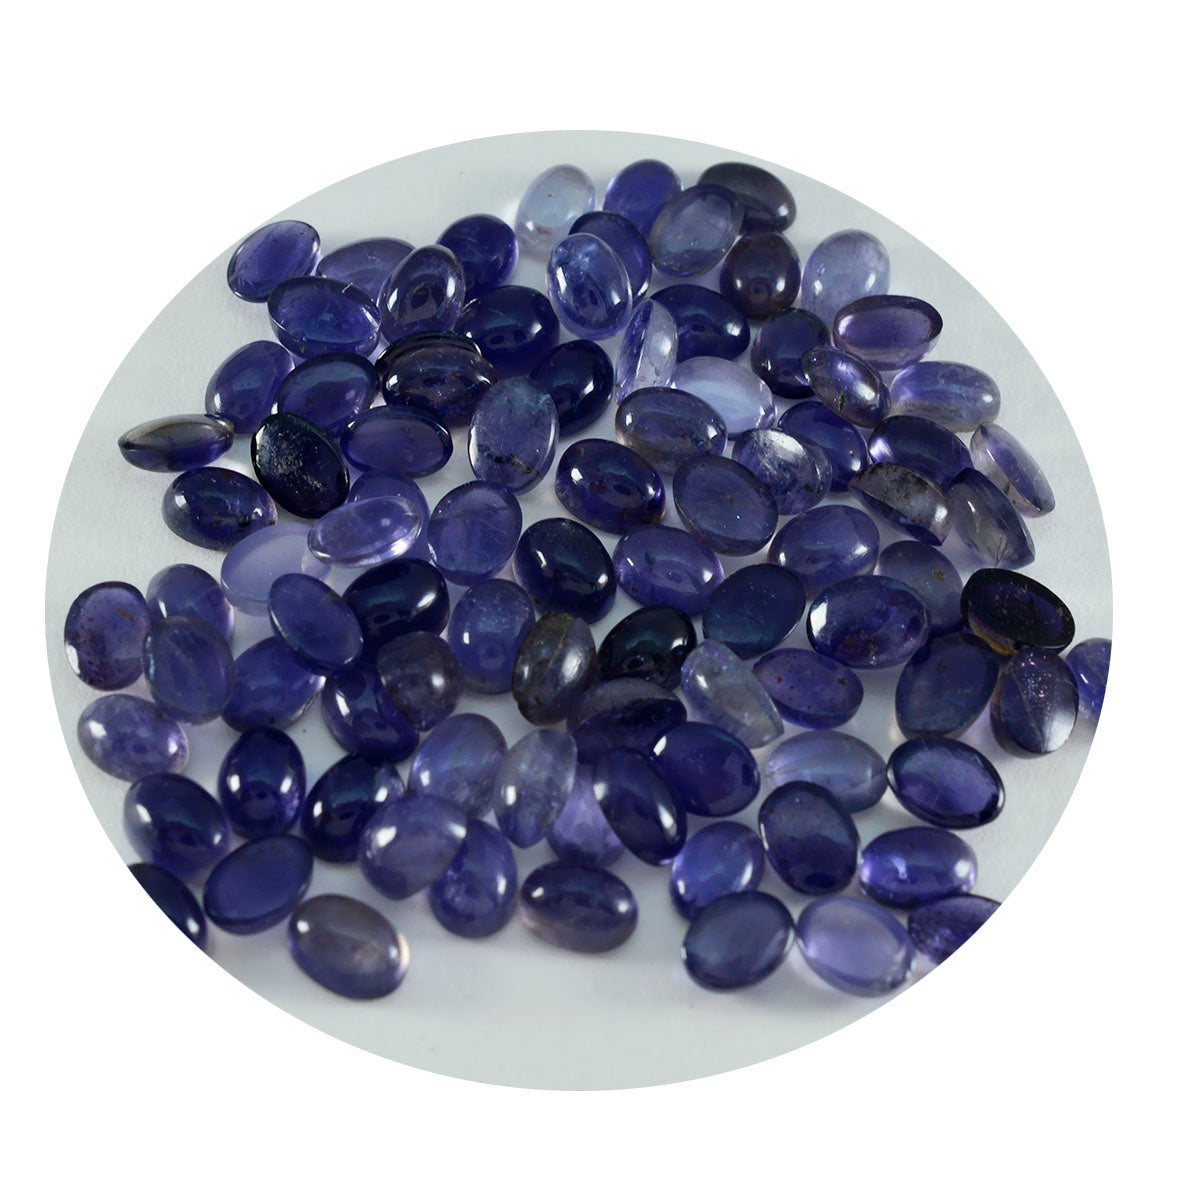 Riyogems 1PC blauwe ioliet cabochon 3x5 mm ovale vorm knappe kwaliteit losse edelsteen